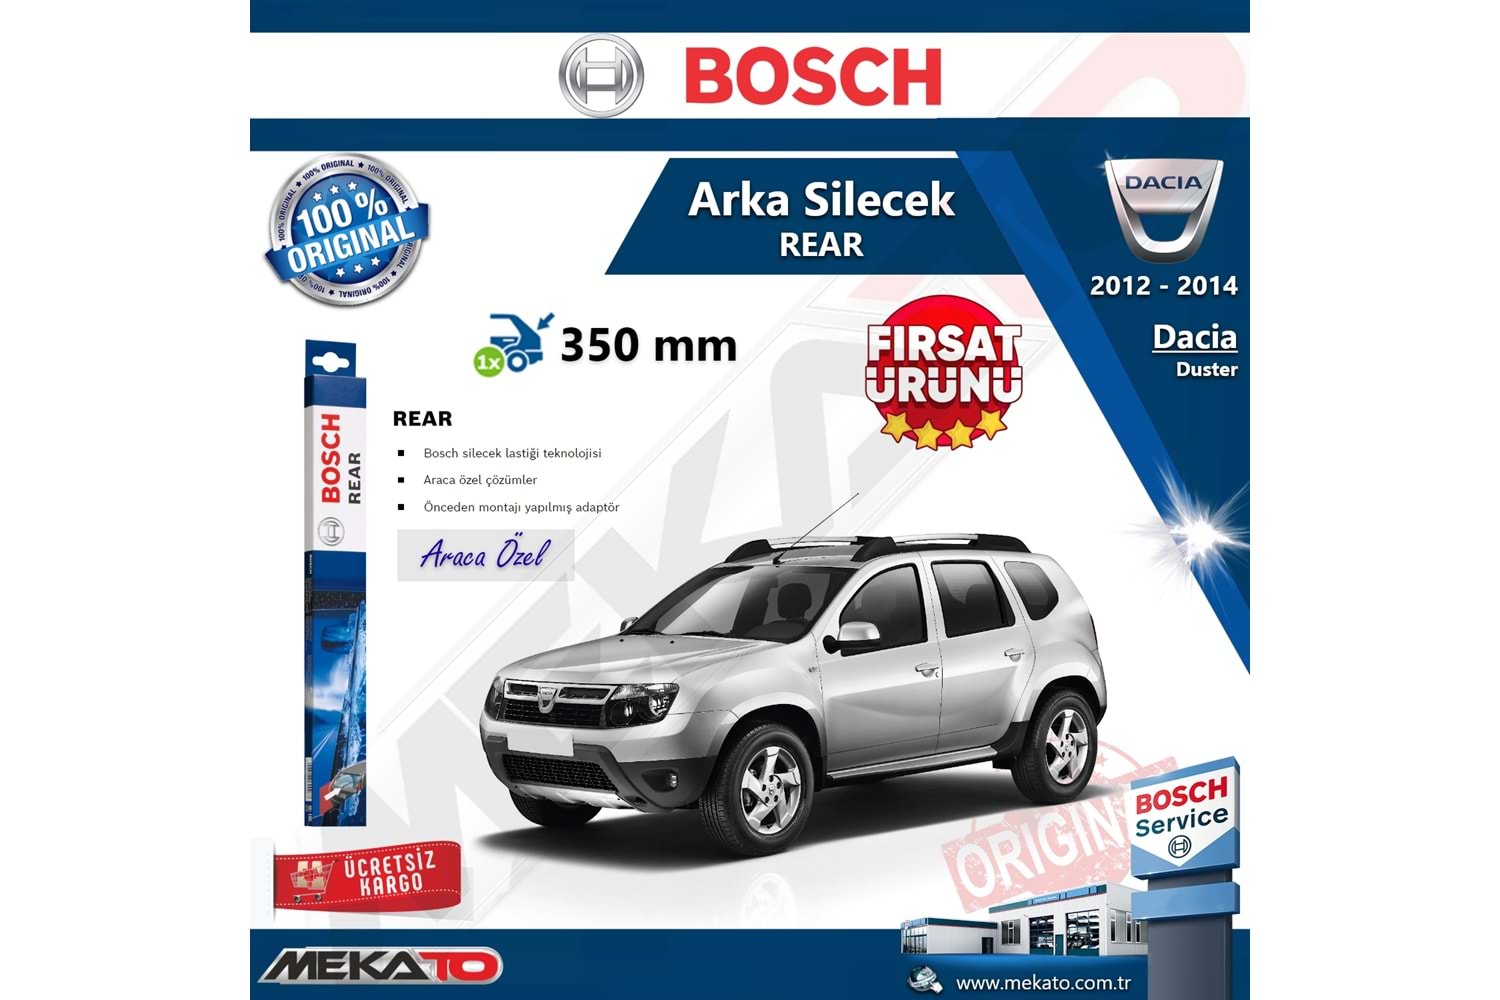 Dacia Duster Arka Silecek Bosch Rear 2012-2014